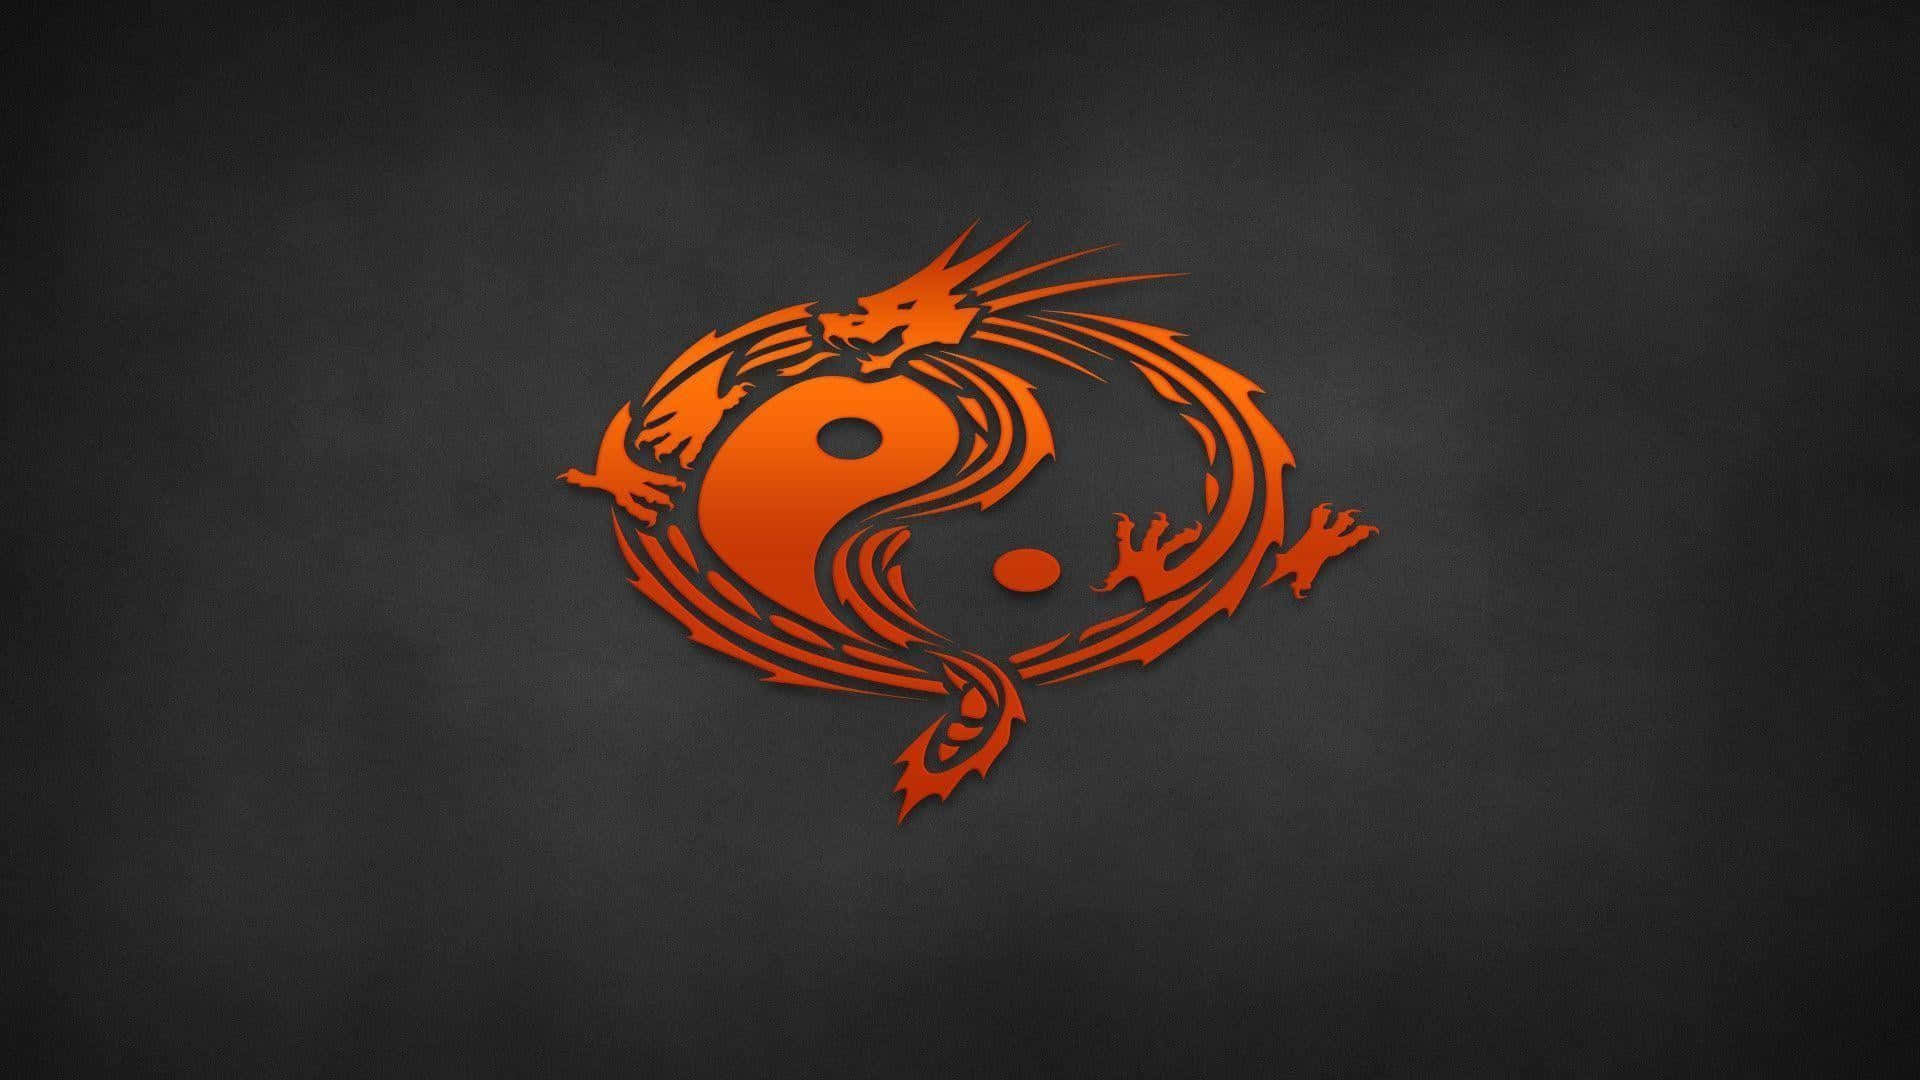 A Dragon Logo On A Black Background